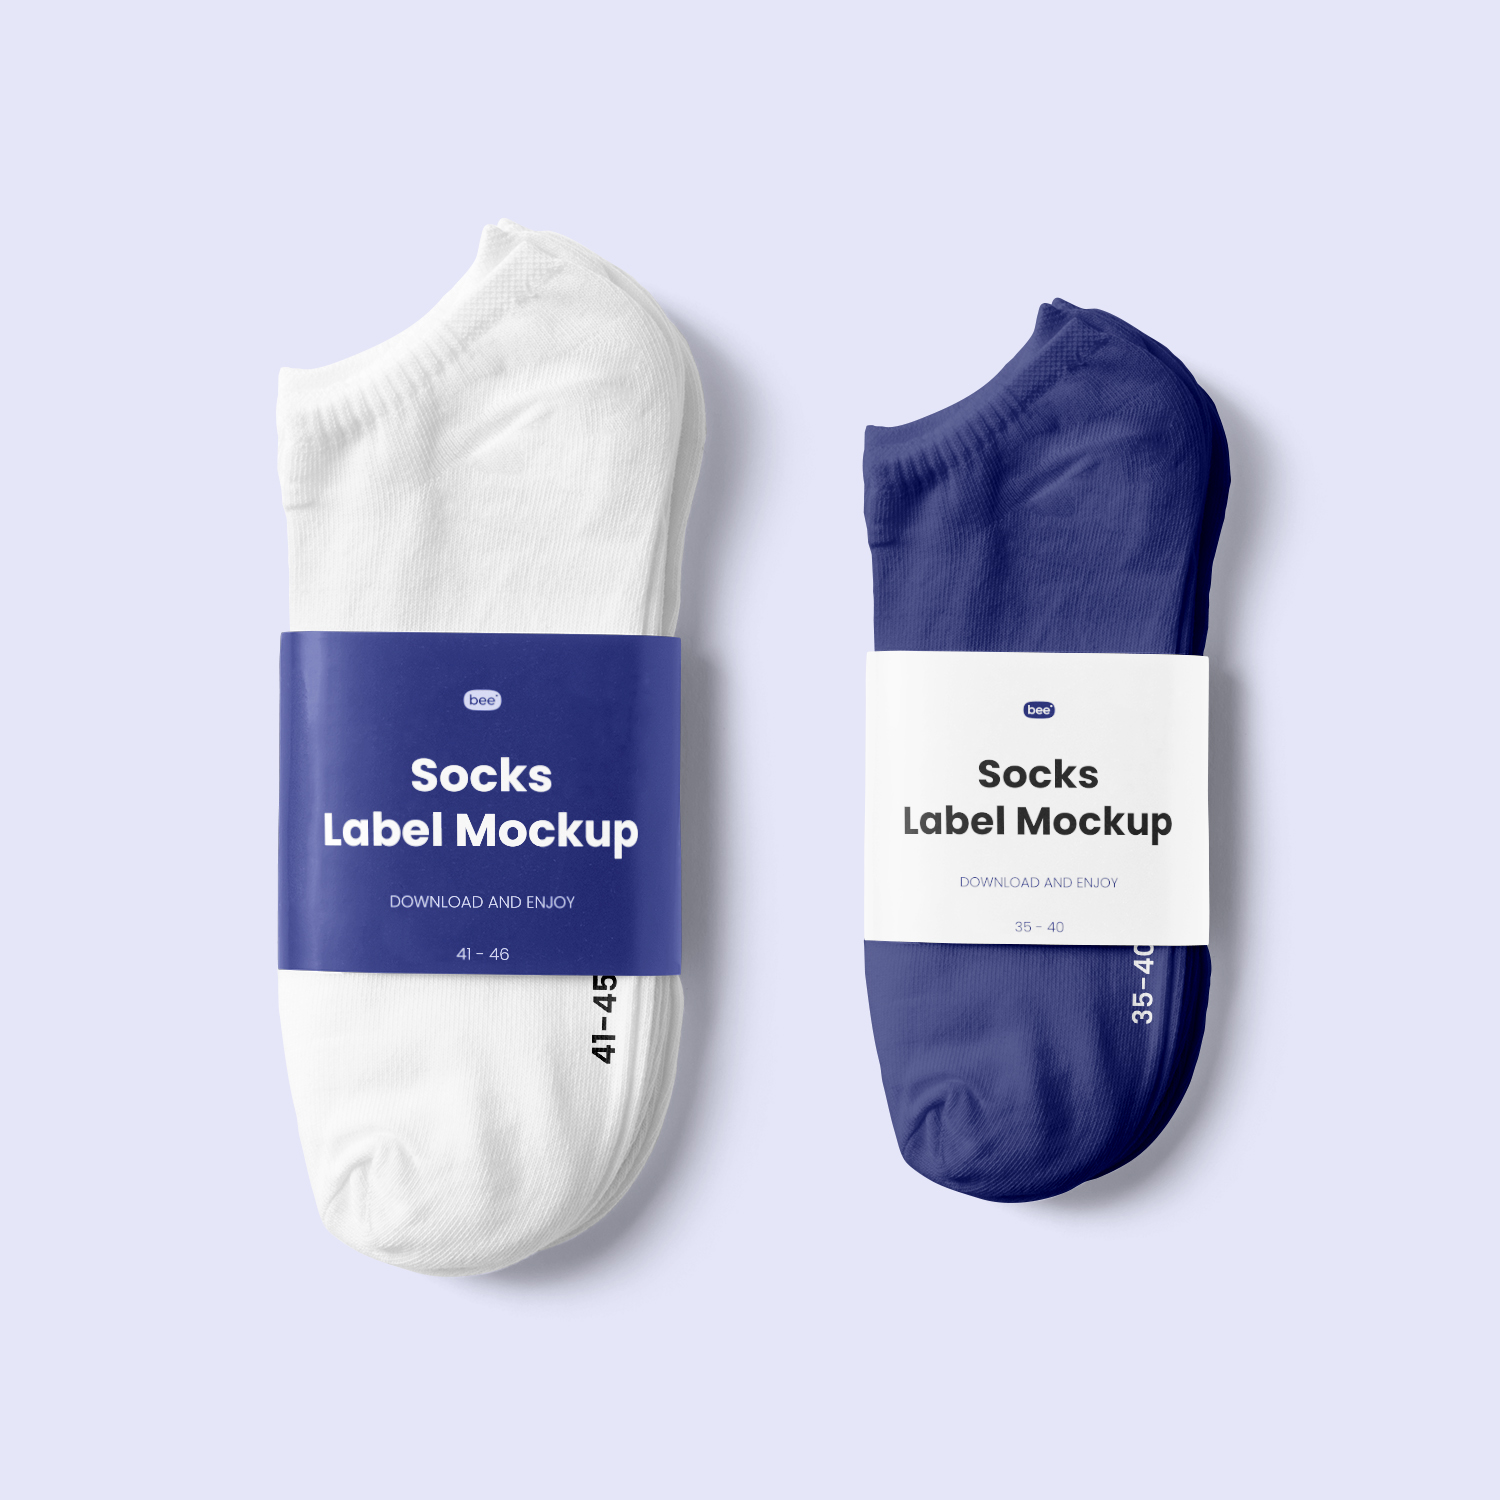 Socks with Label Free Mockup PSD Download - Free Mockup World